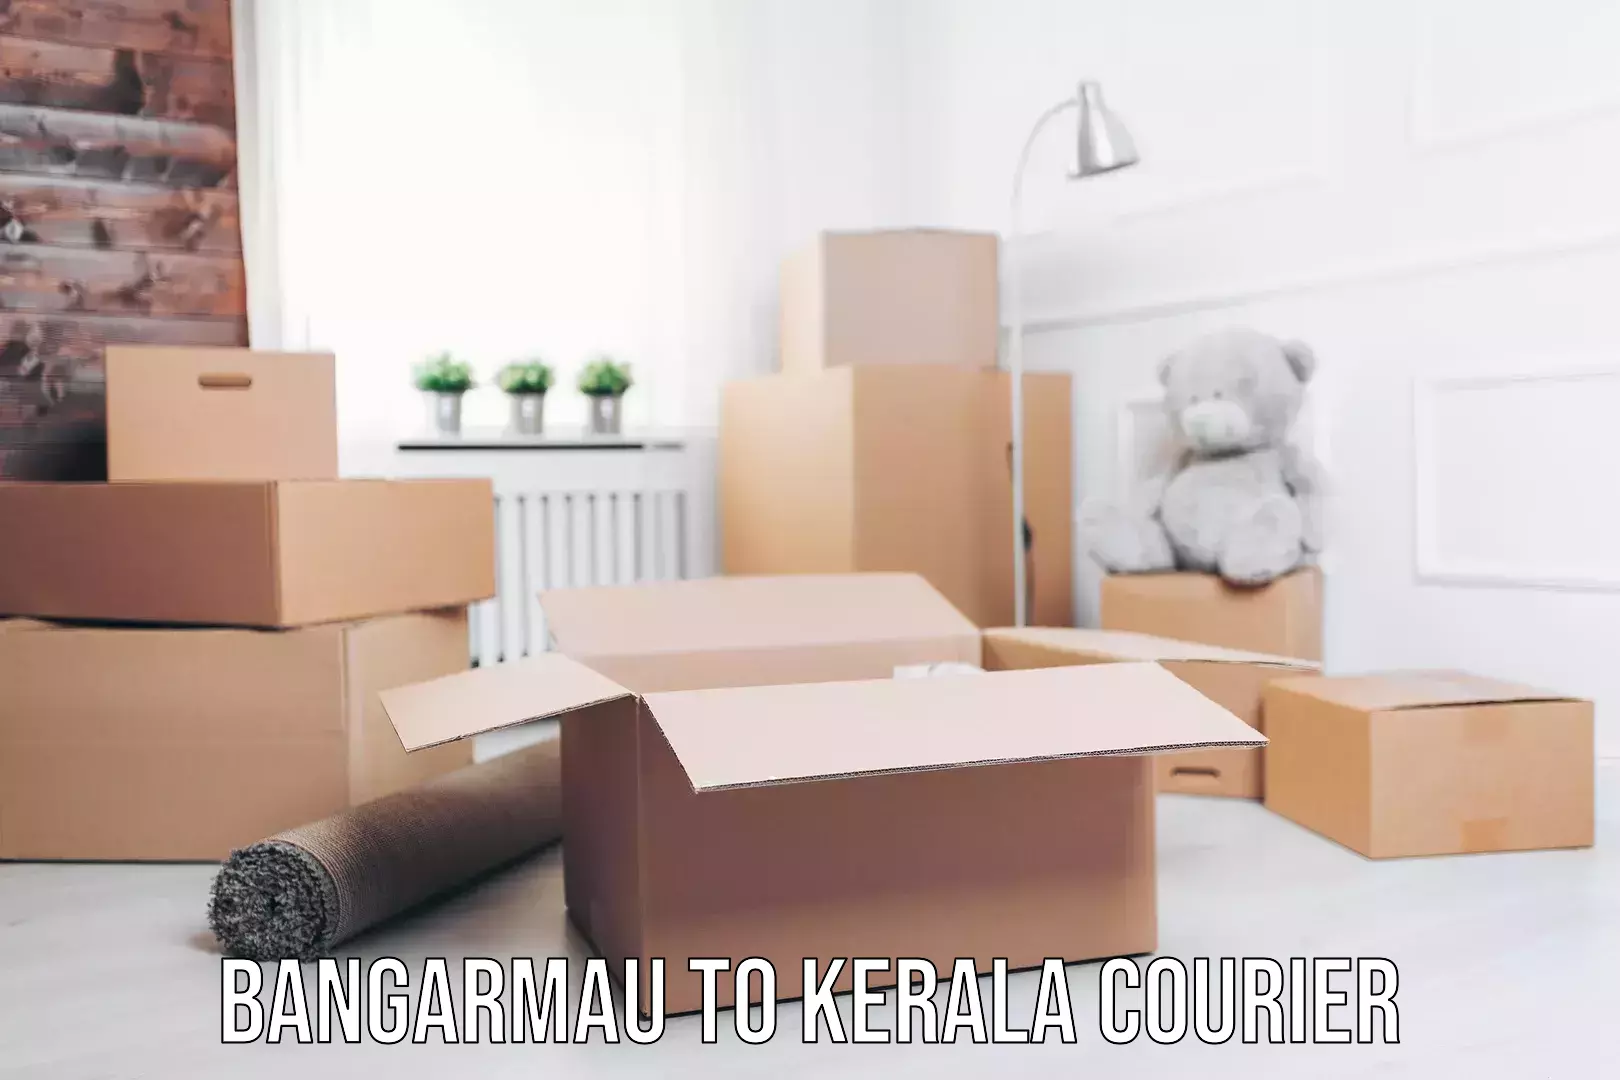 Efficient order fulfillment Bangarmau to Kerala